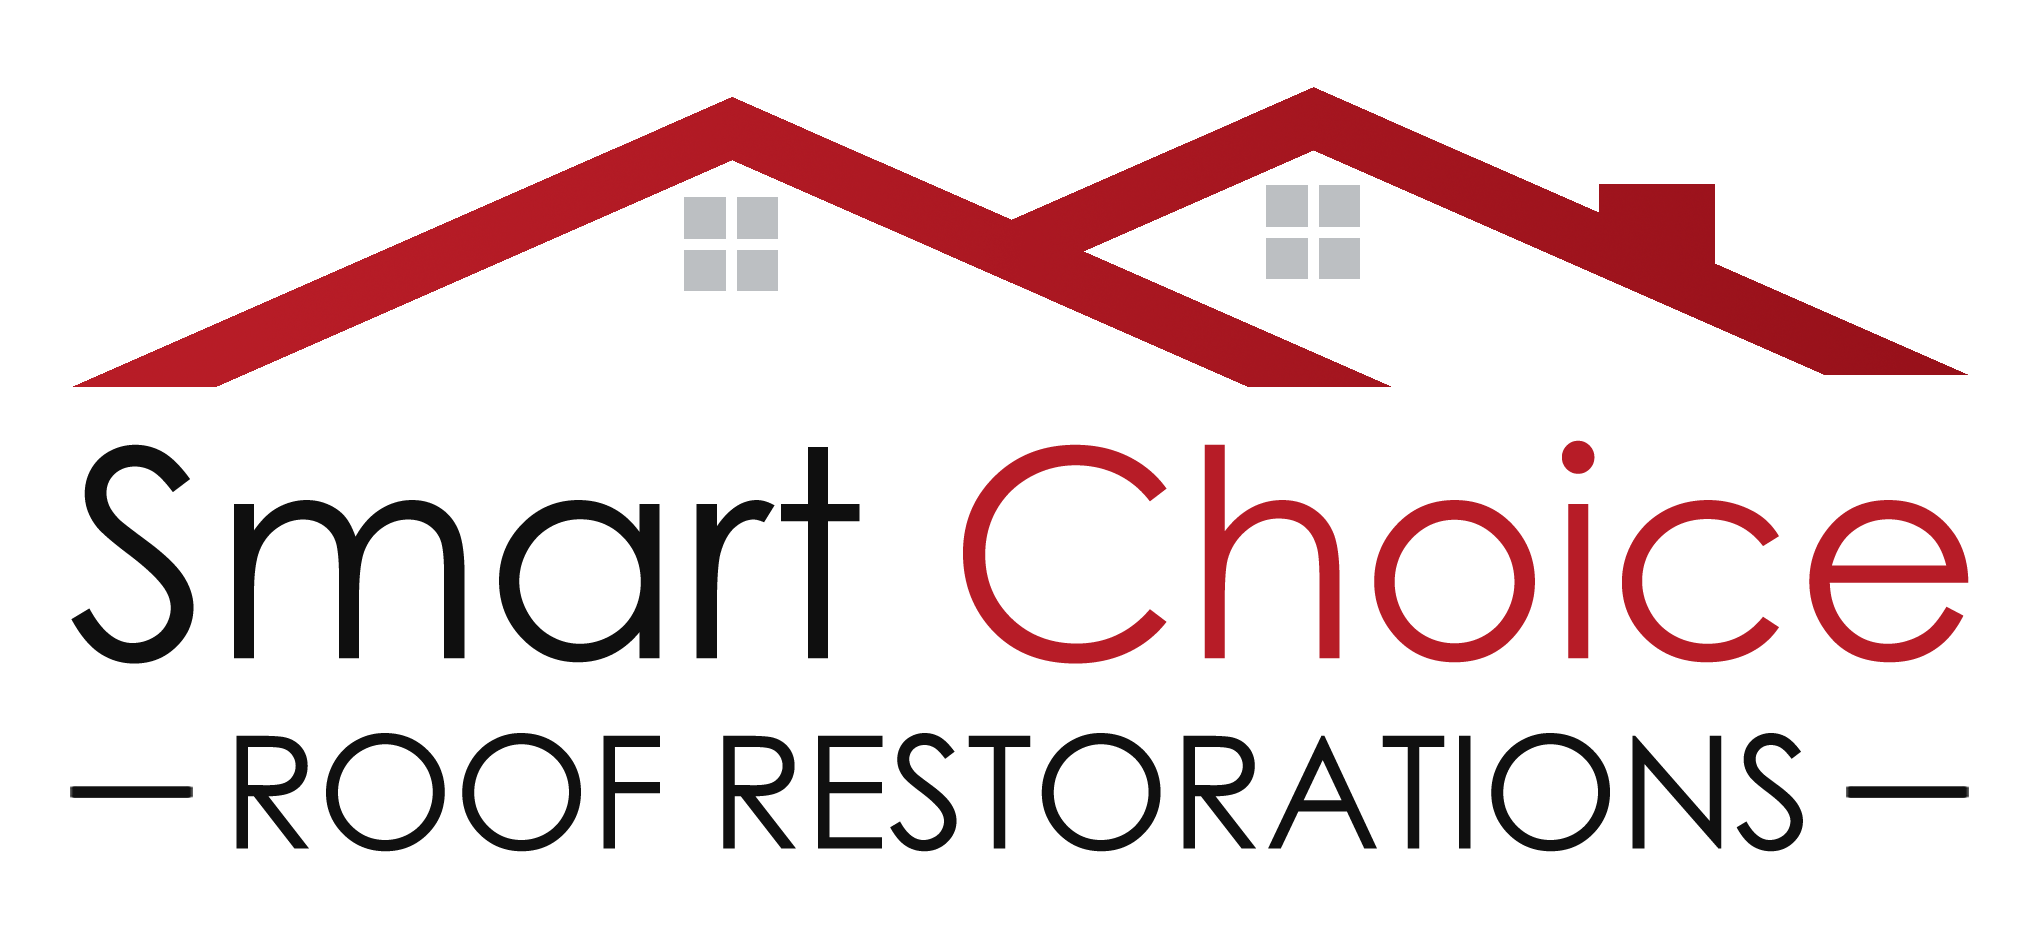 Smart Choice Roof Restorations